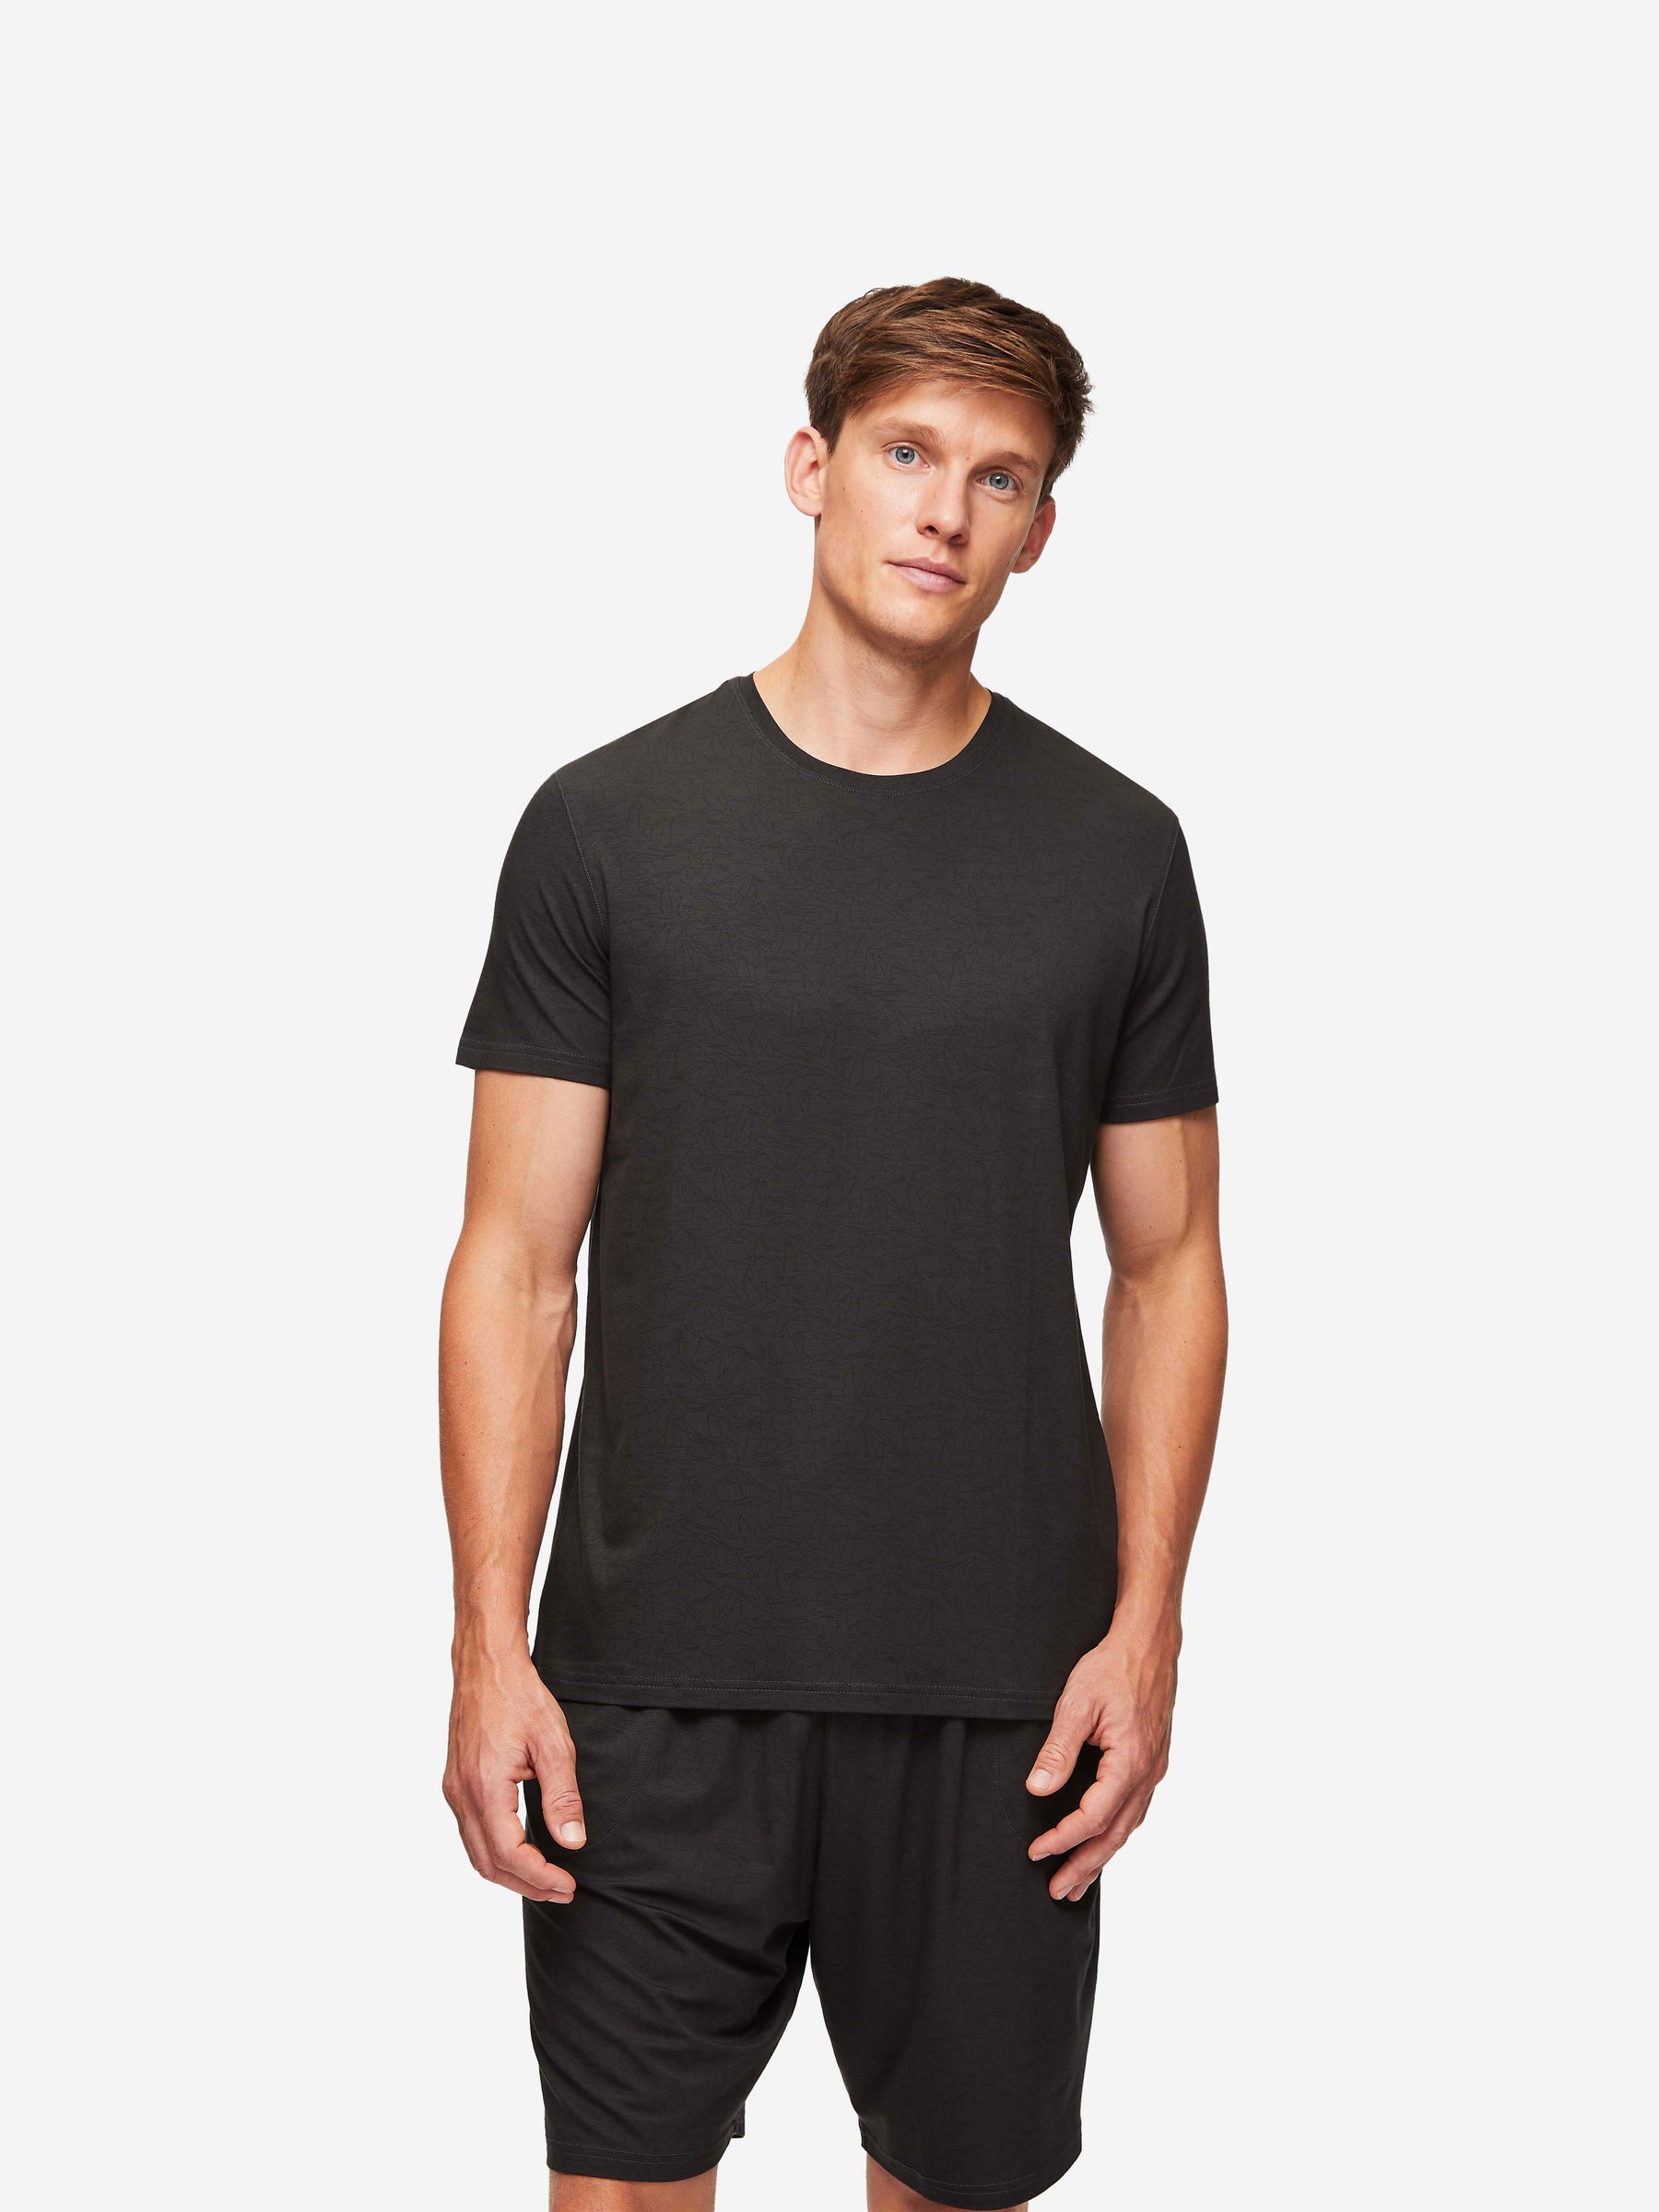 Men's T-Shirt London 9 Bird Print Micro Modal Black